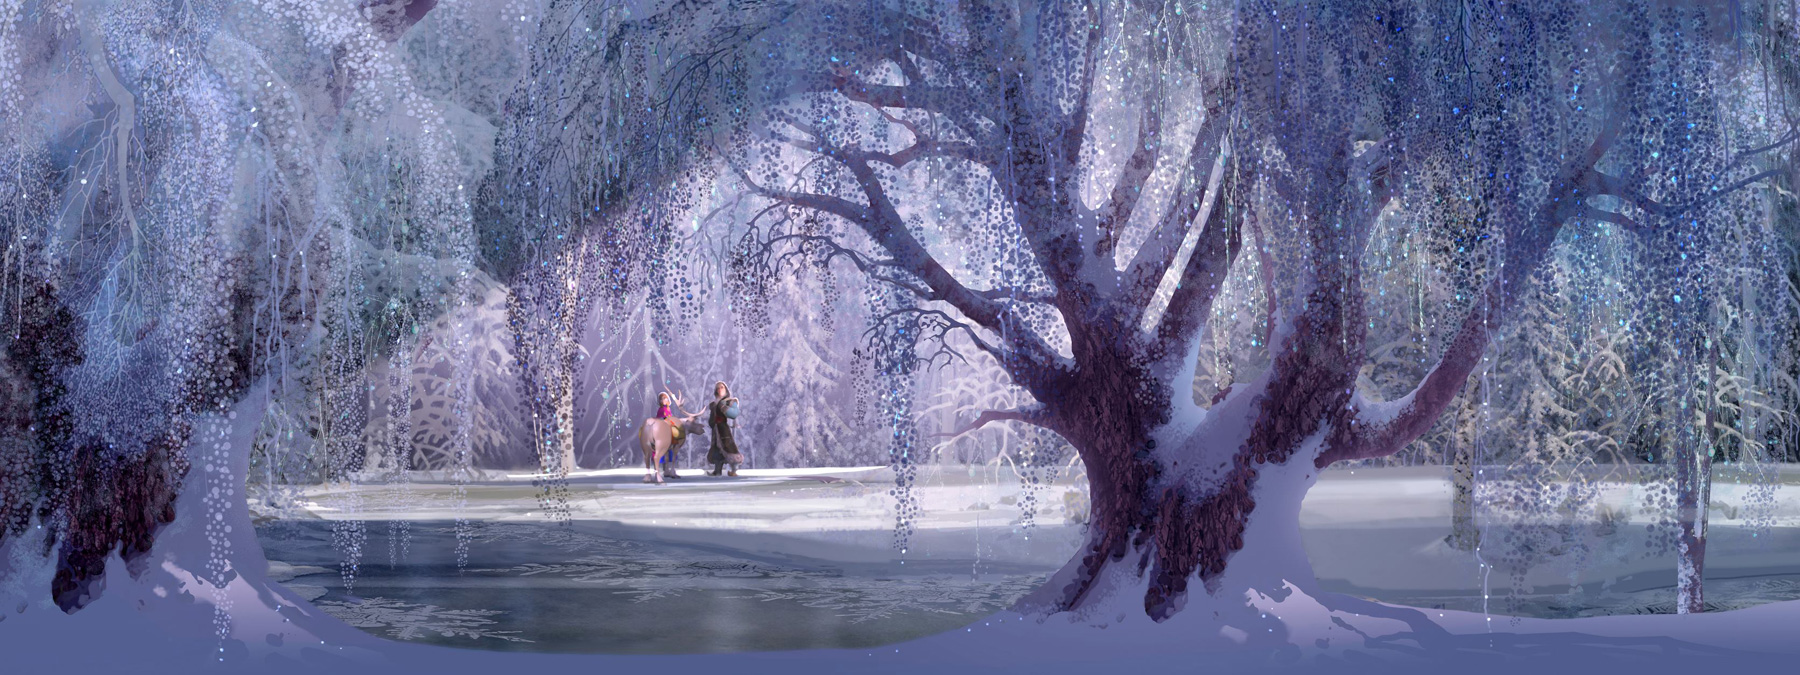 Disney_Frozen_Concept_Art_El arte conceptual de Frozen